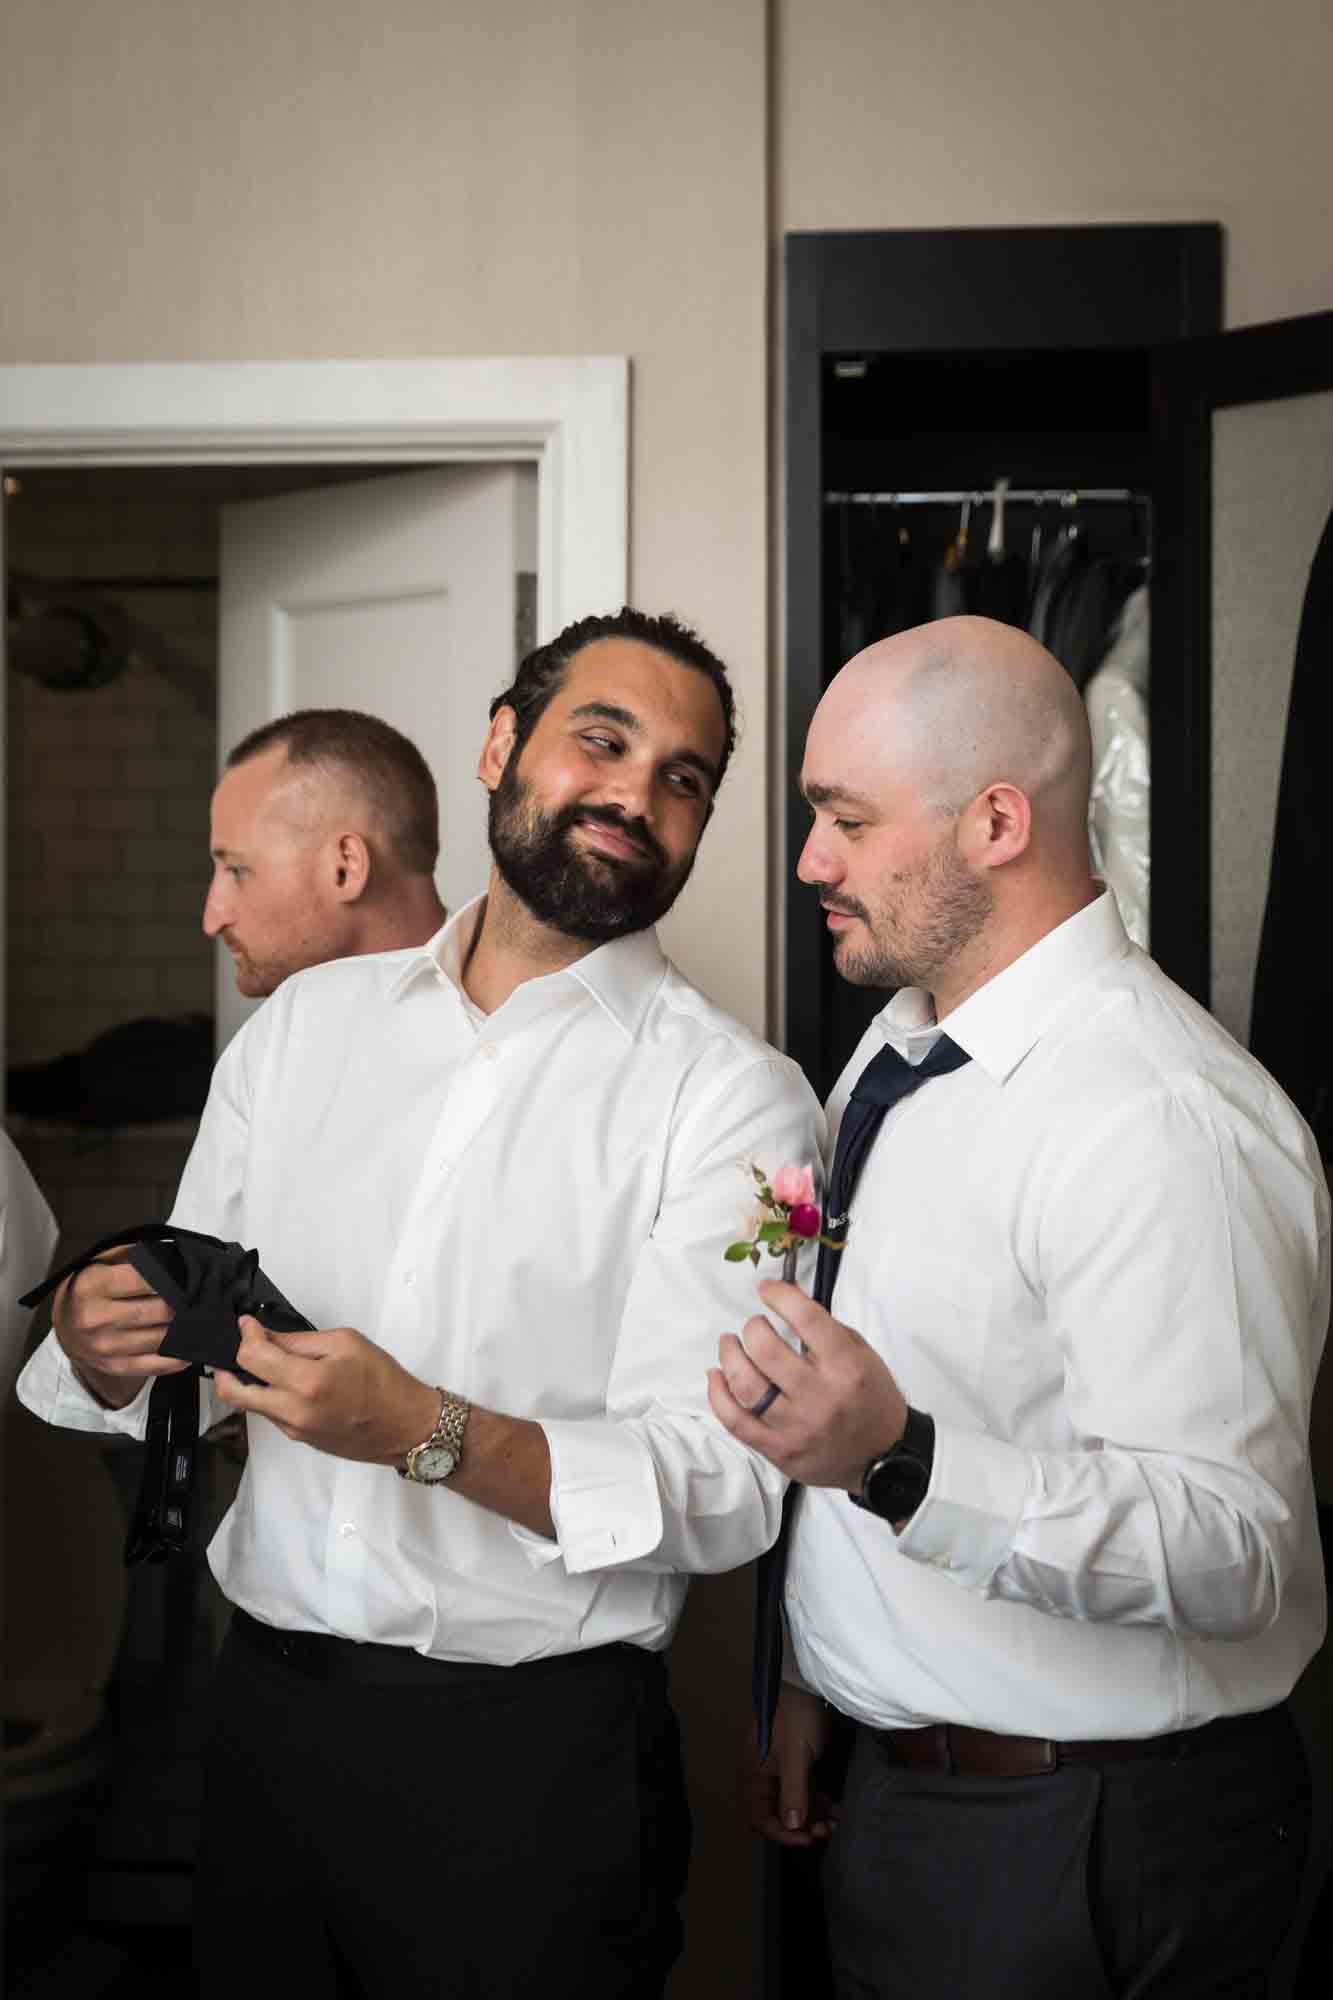 Groom smiling with groomsman holding flowers in hotel room